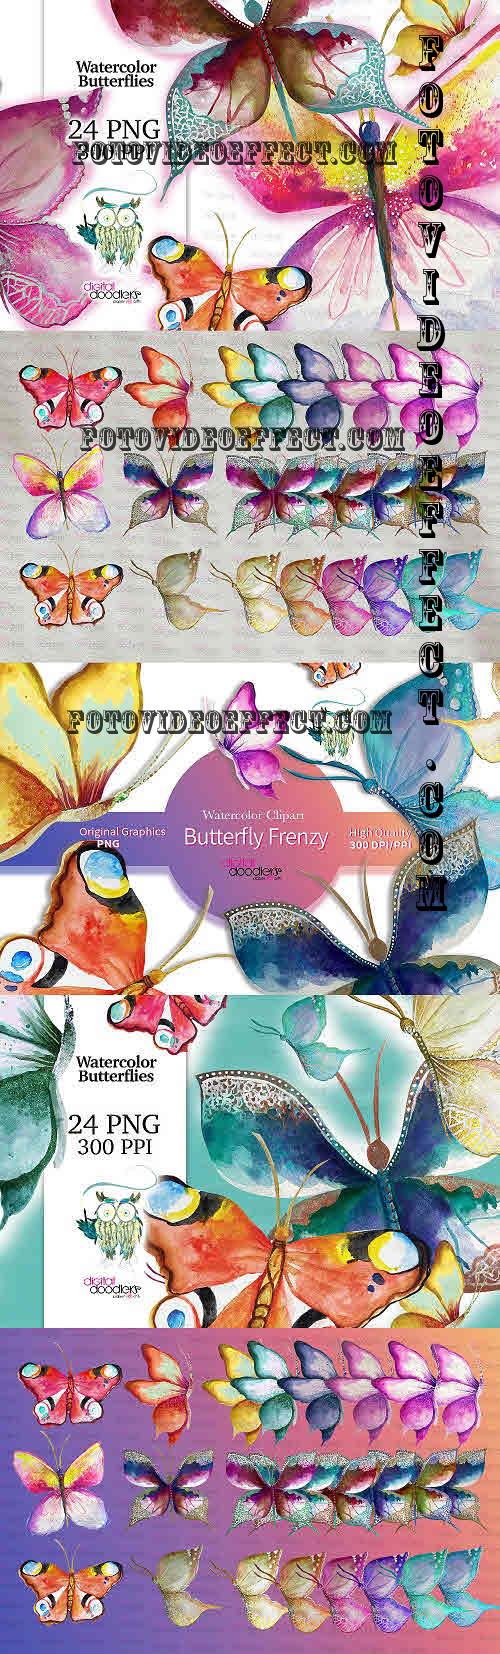 Watercolor Hand Painted Butterflies - 2398072